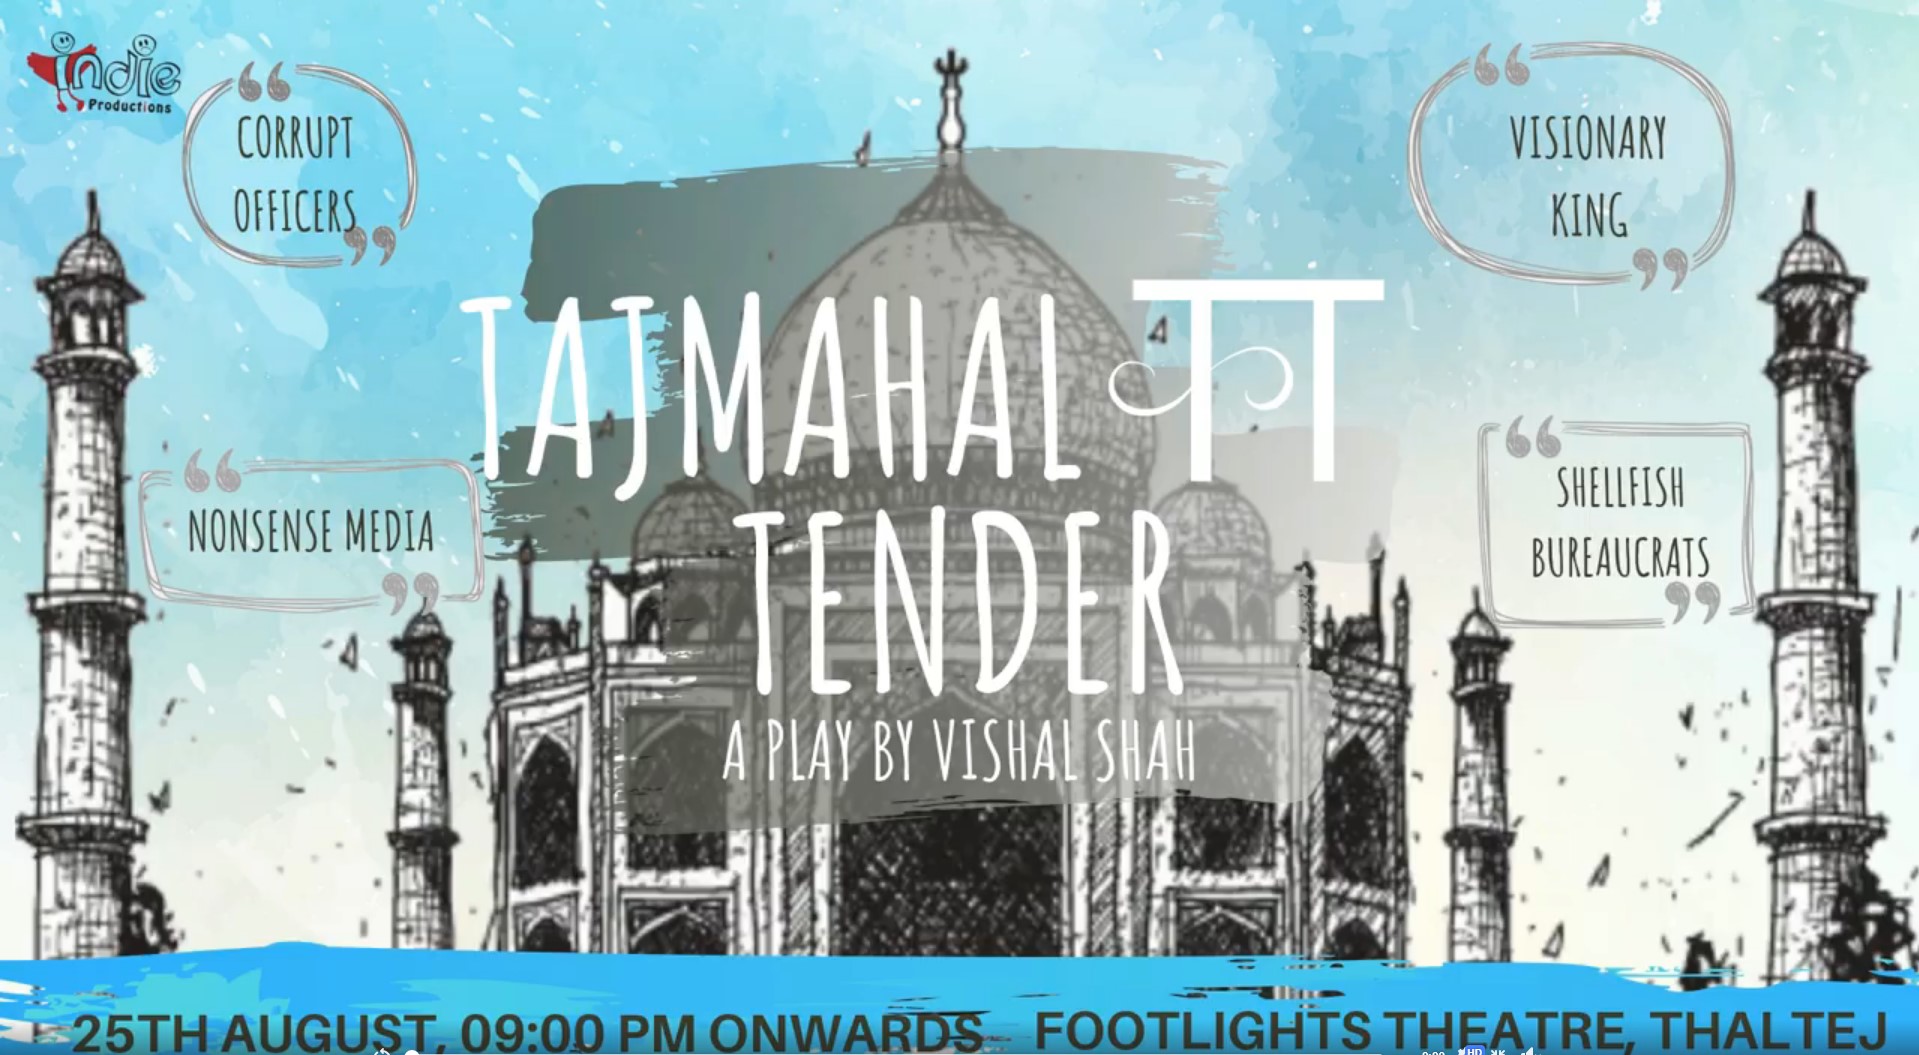 Tajmahal Ka Tender A Humorous Hindi Play